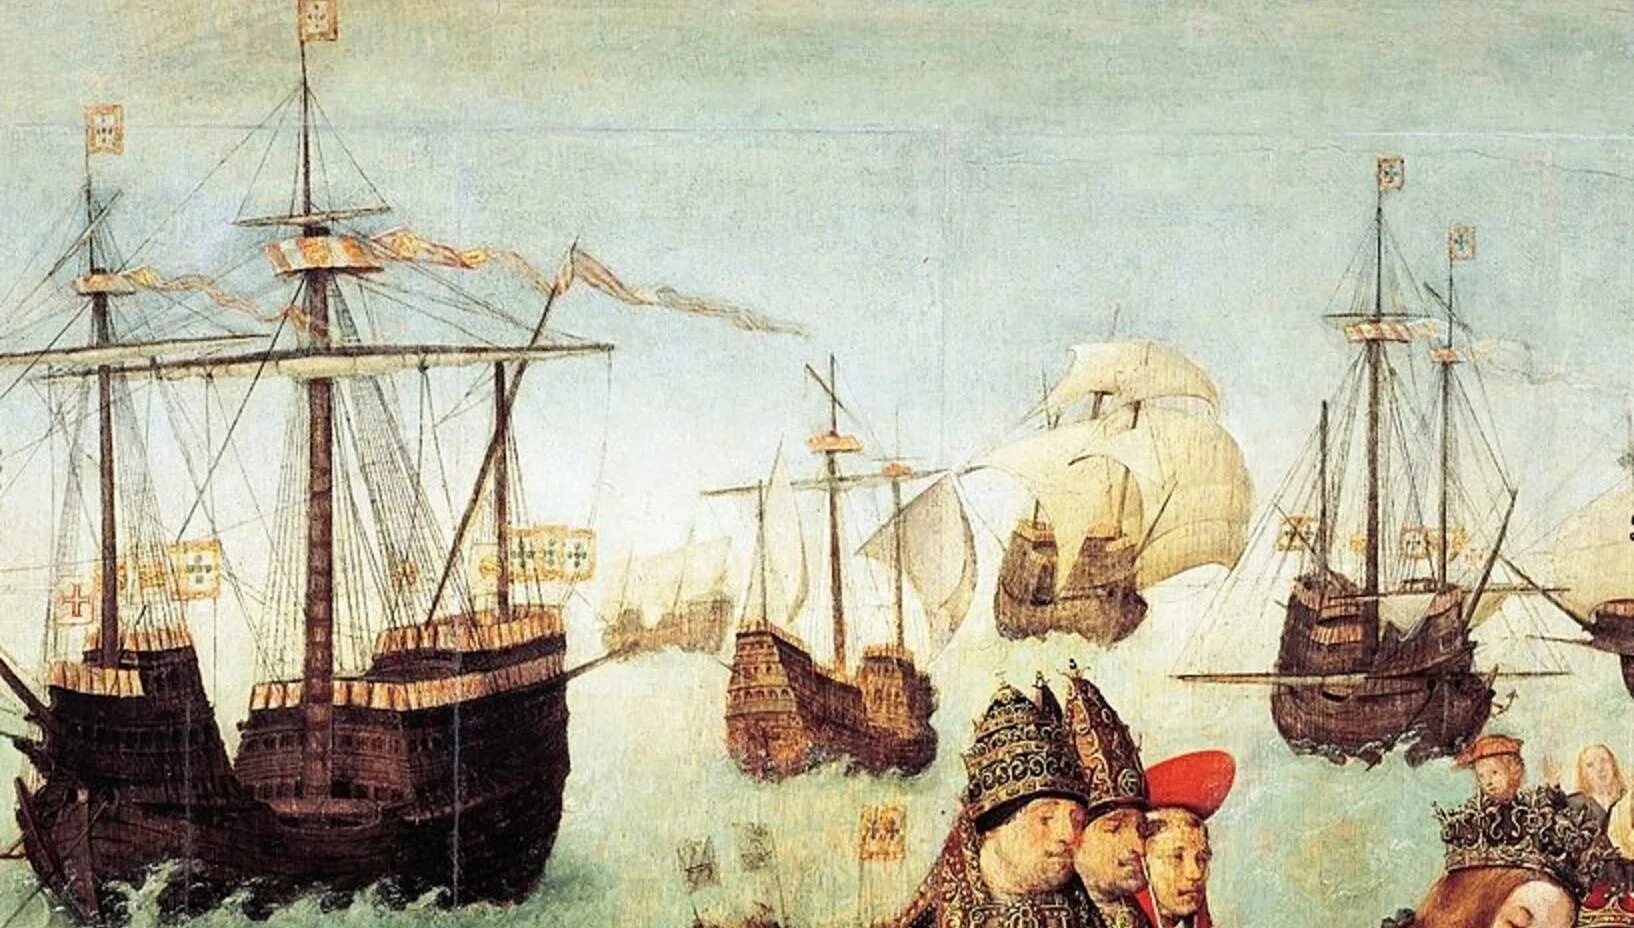 Велик век 16. Венецианская каракка. Каракка гравюра. Каракка Тринидад. Каравелла 16 века.